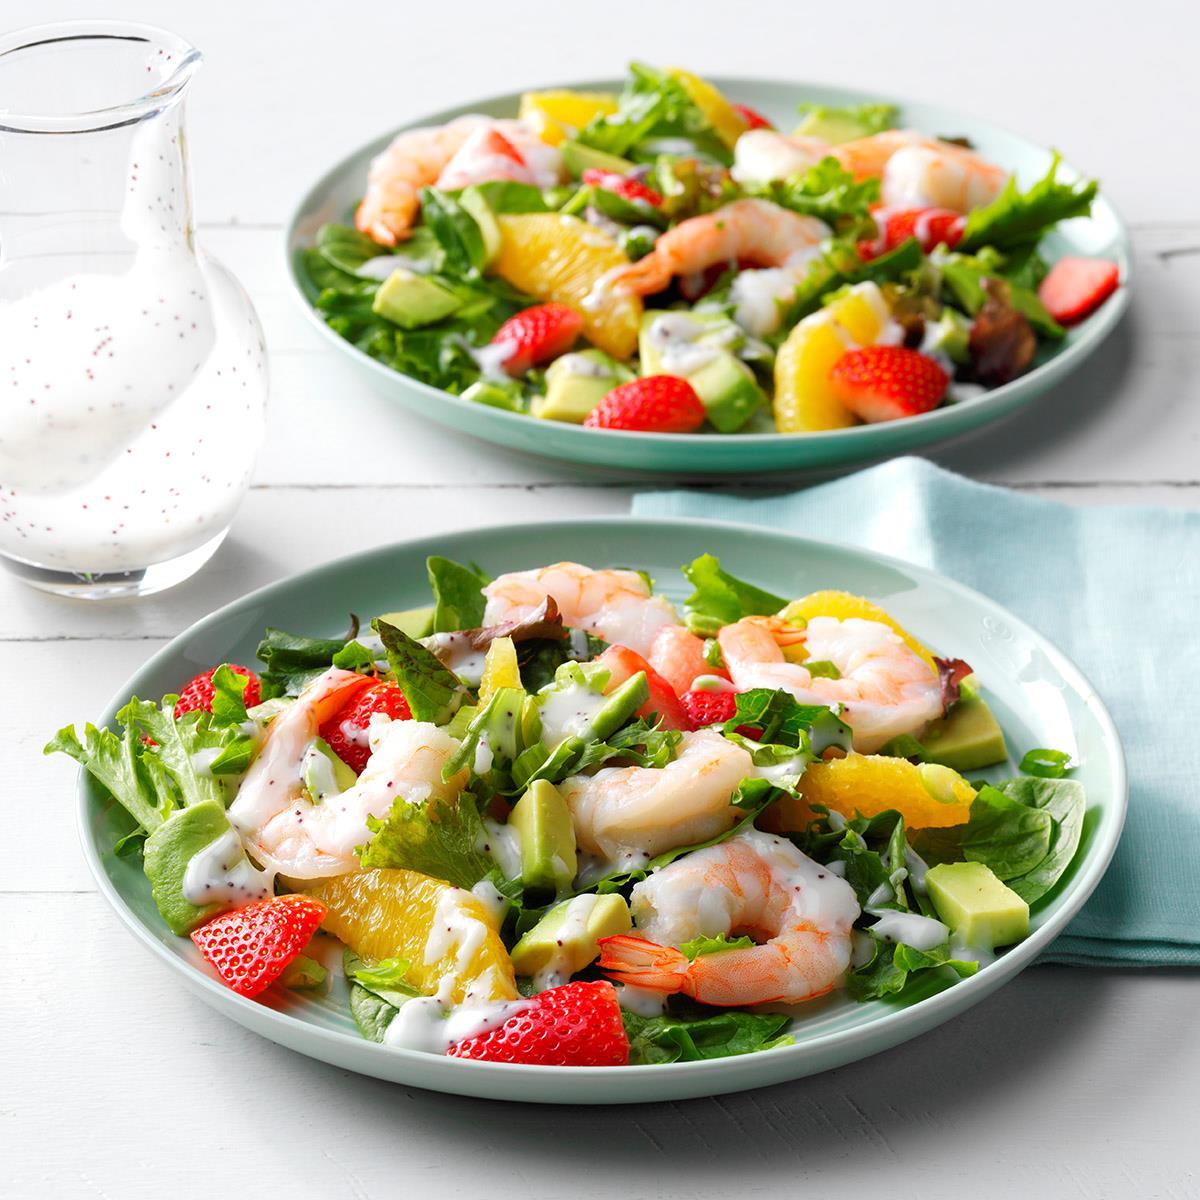 Diabetics Prawn Salad : The Best Seafod Salad My Recipes21 Shrimprecipes Sea Food Salad Recipes ...